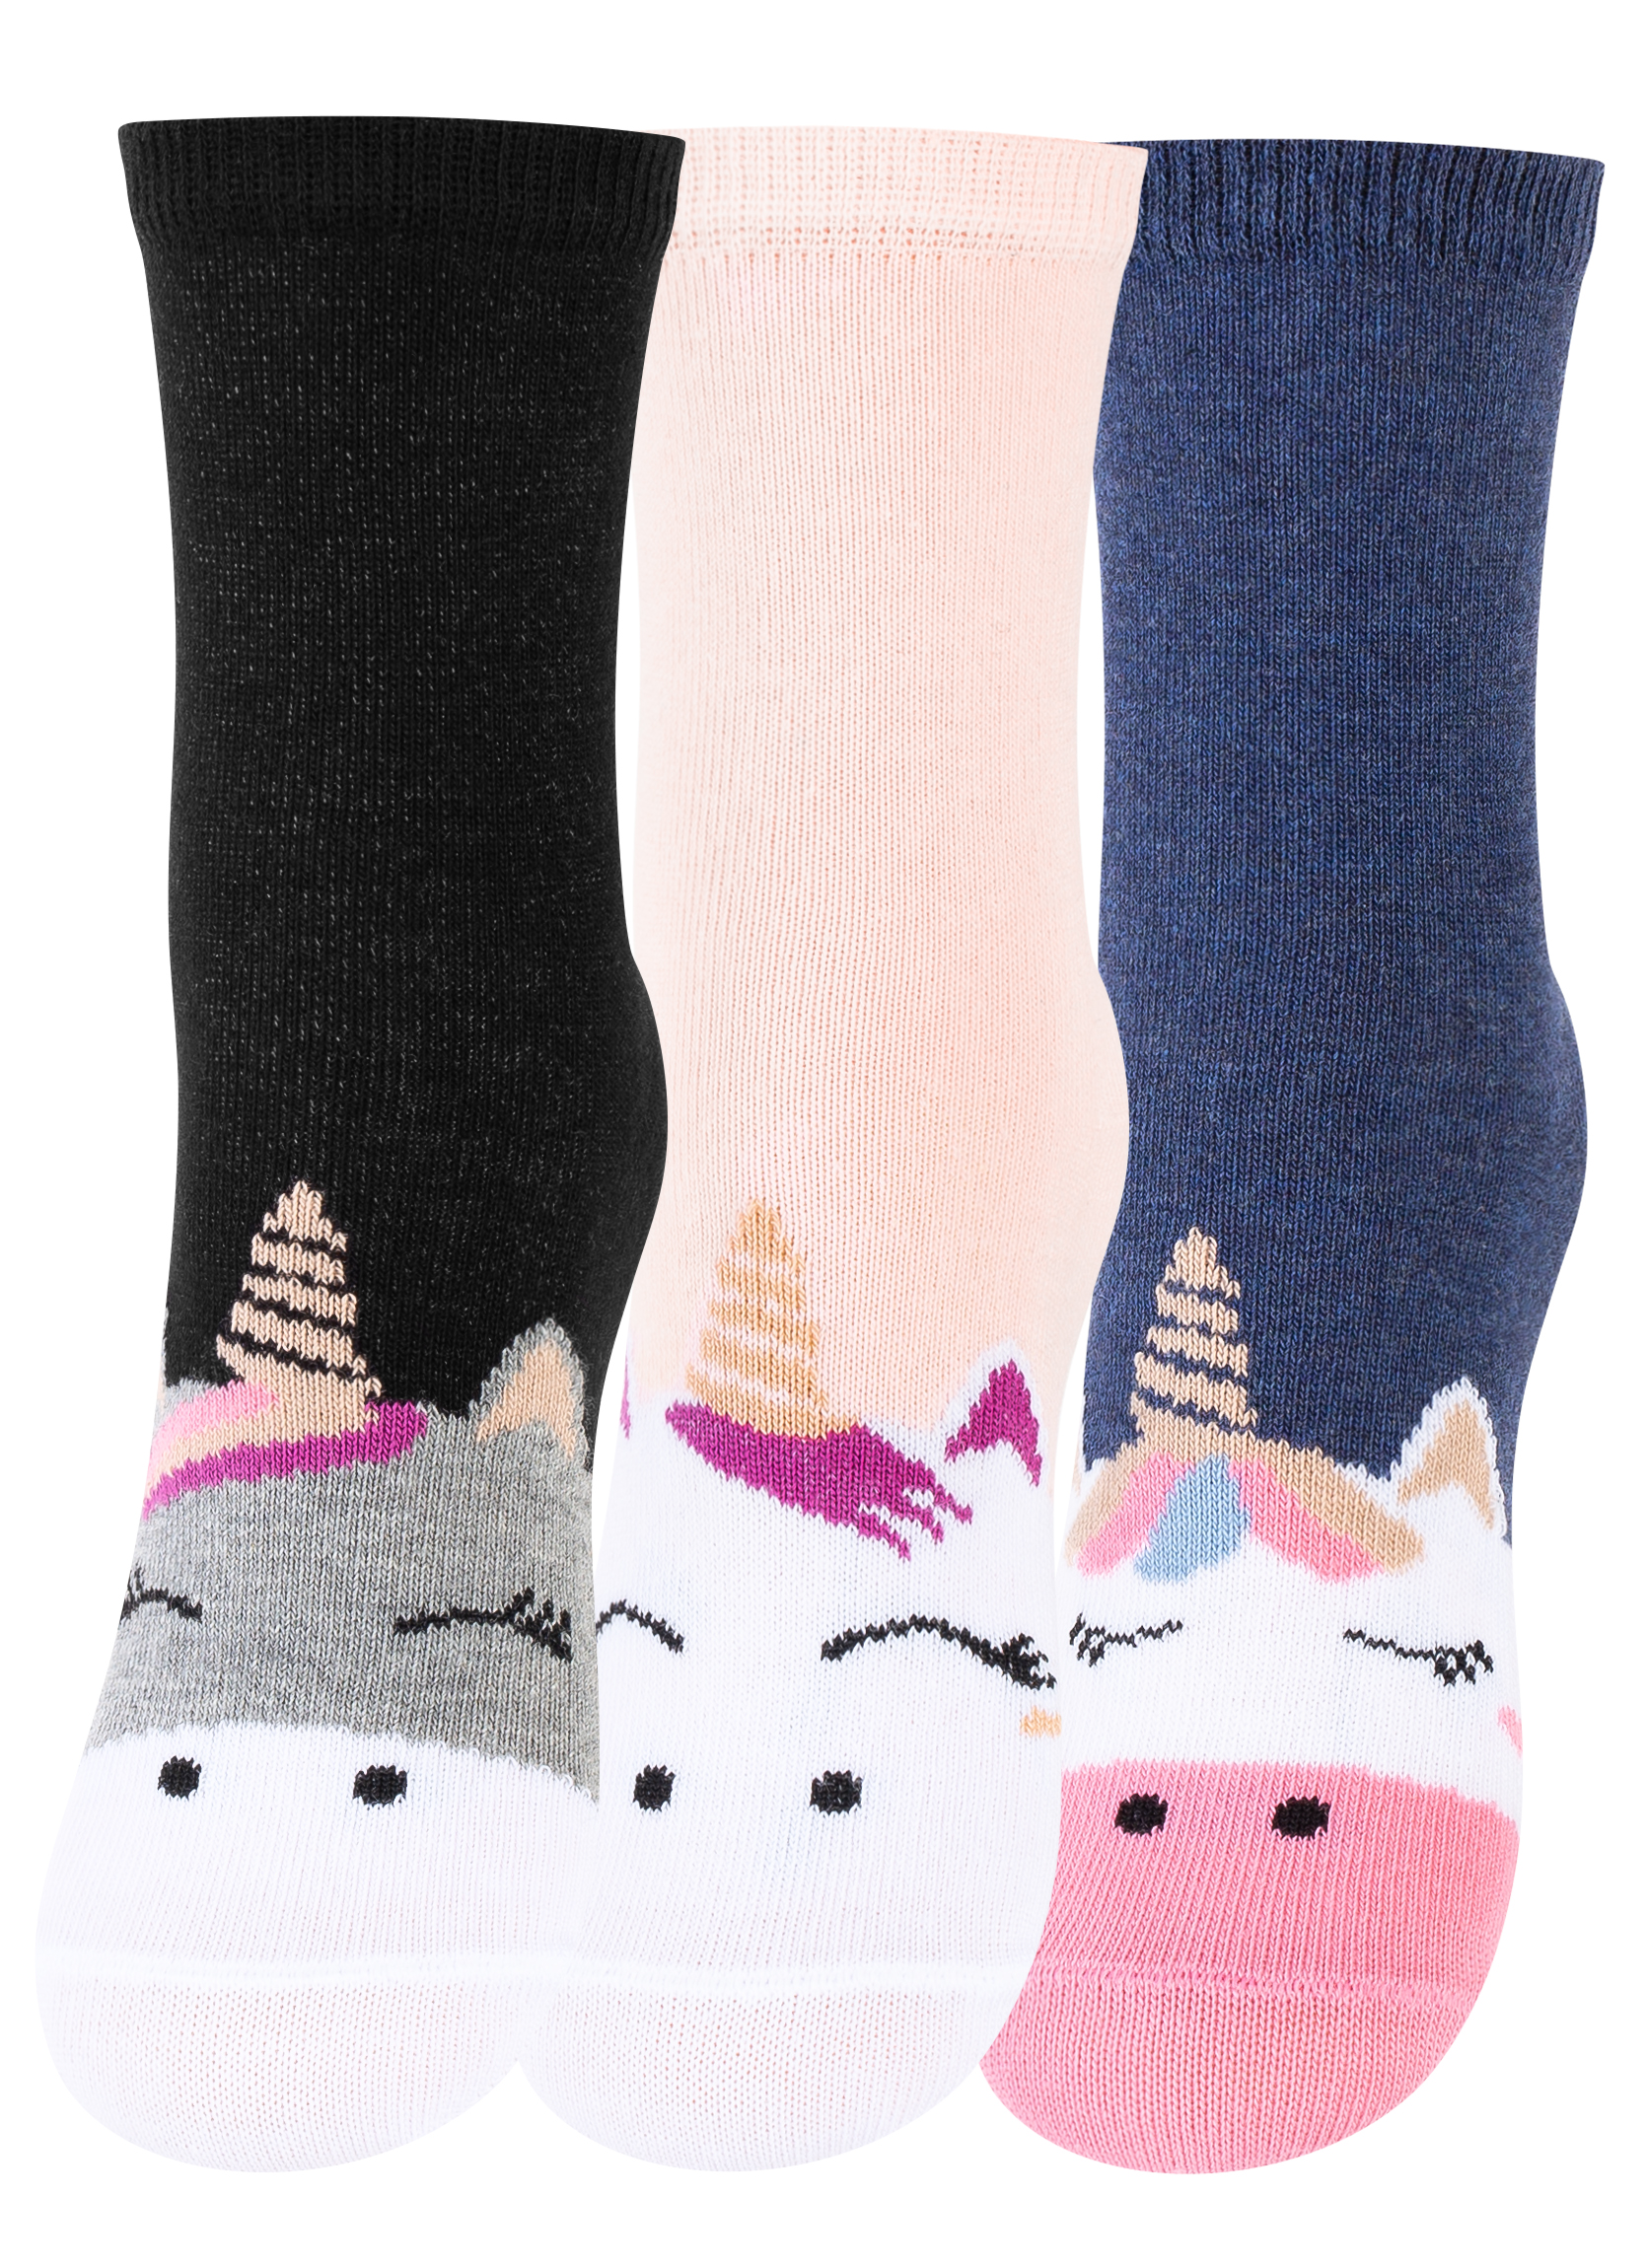 6 Paar Kinder Socken - Einhorn | Söckchen | Strumpfwaren | KINDER